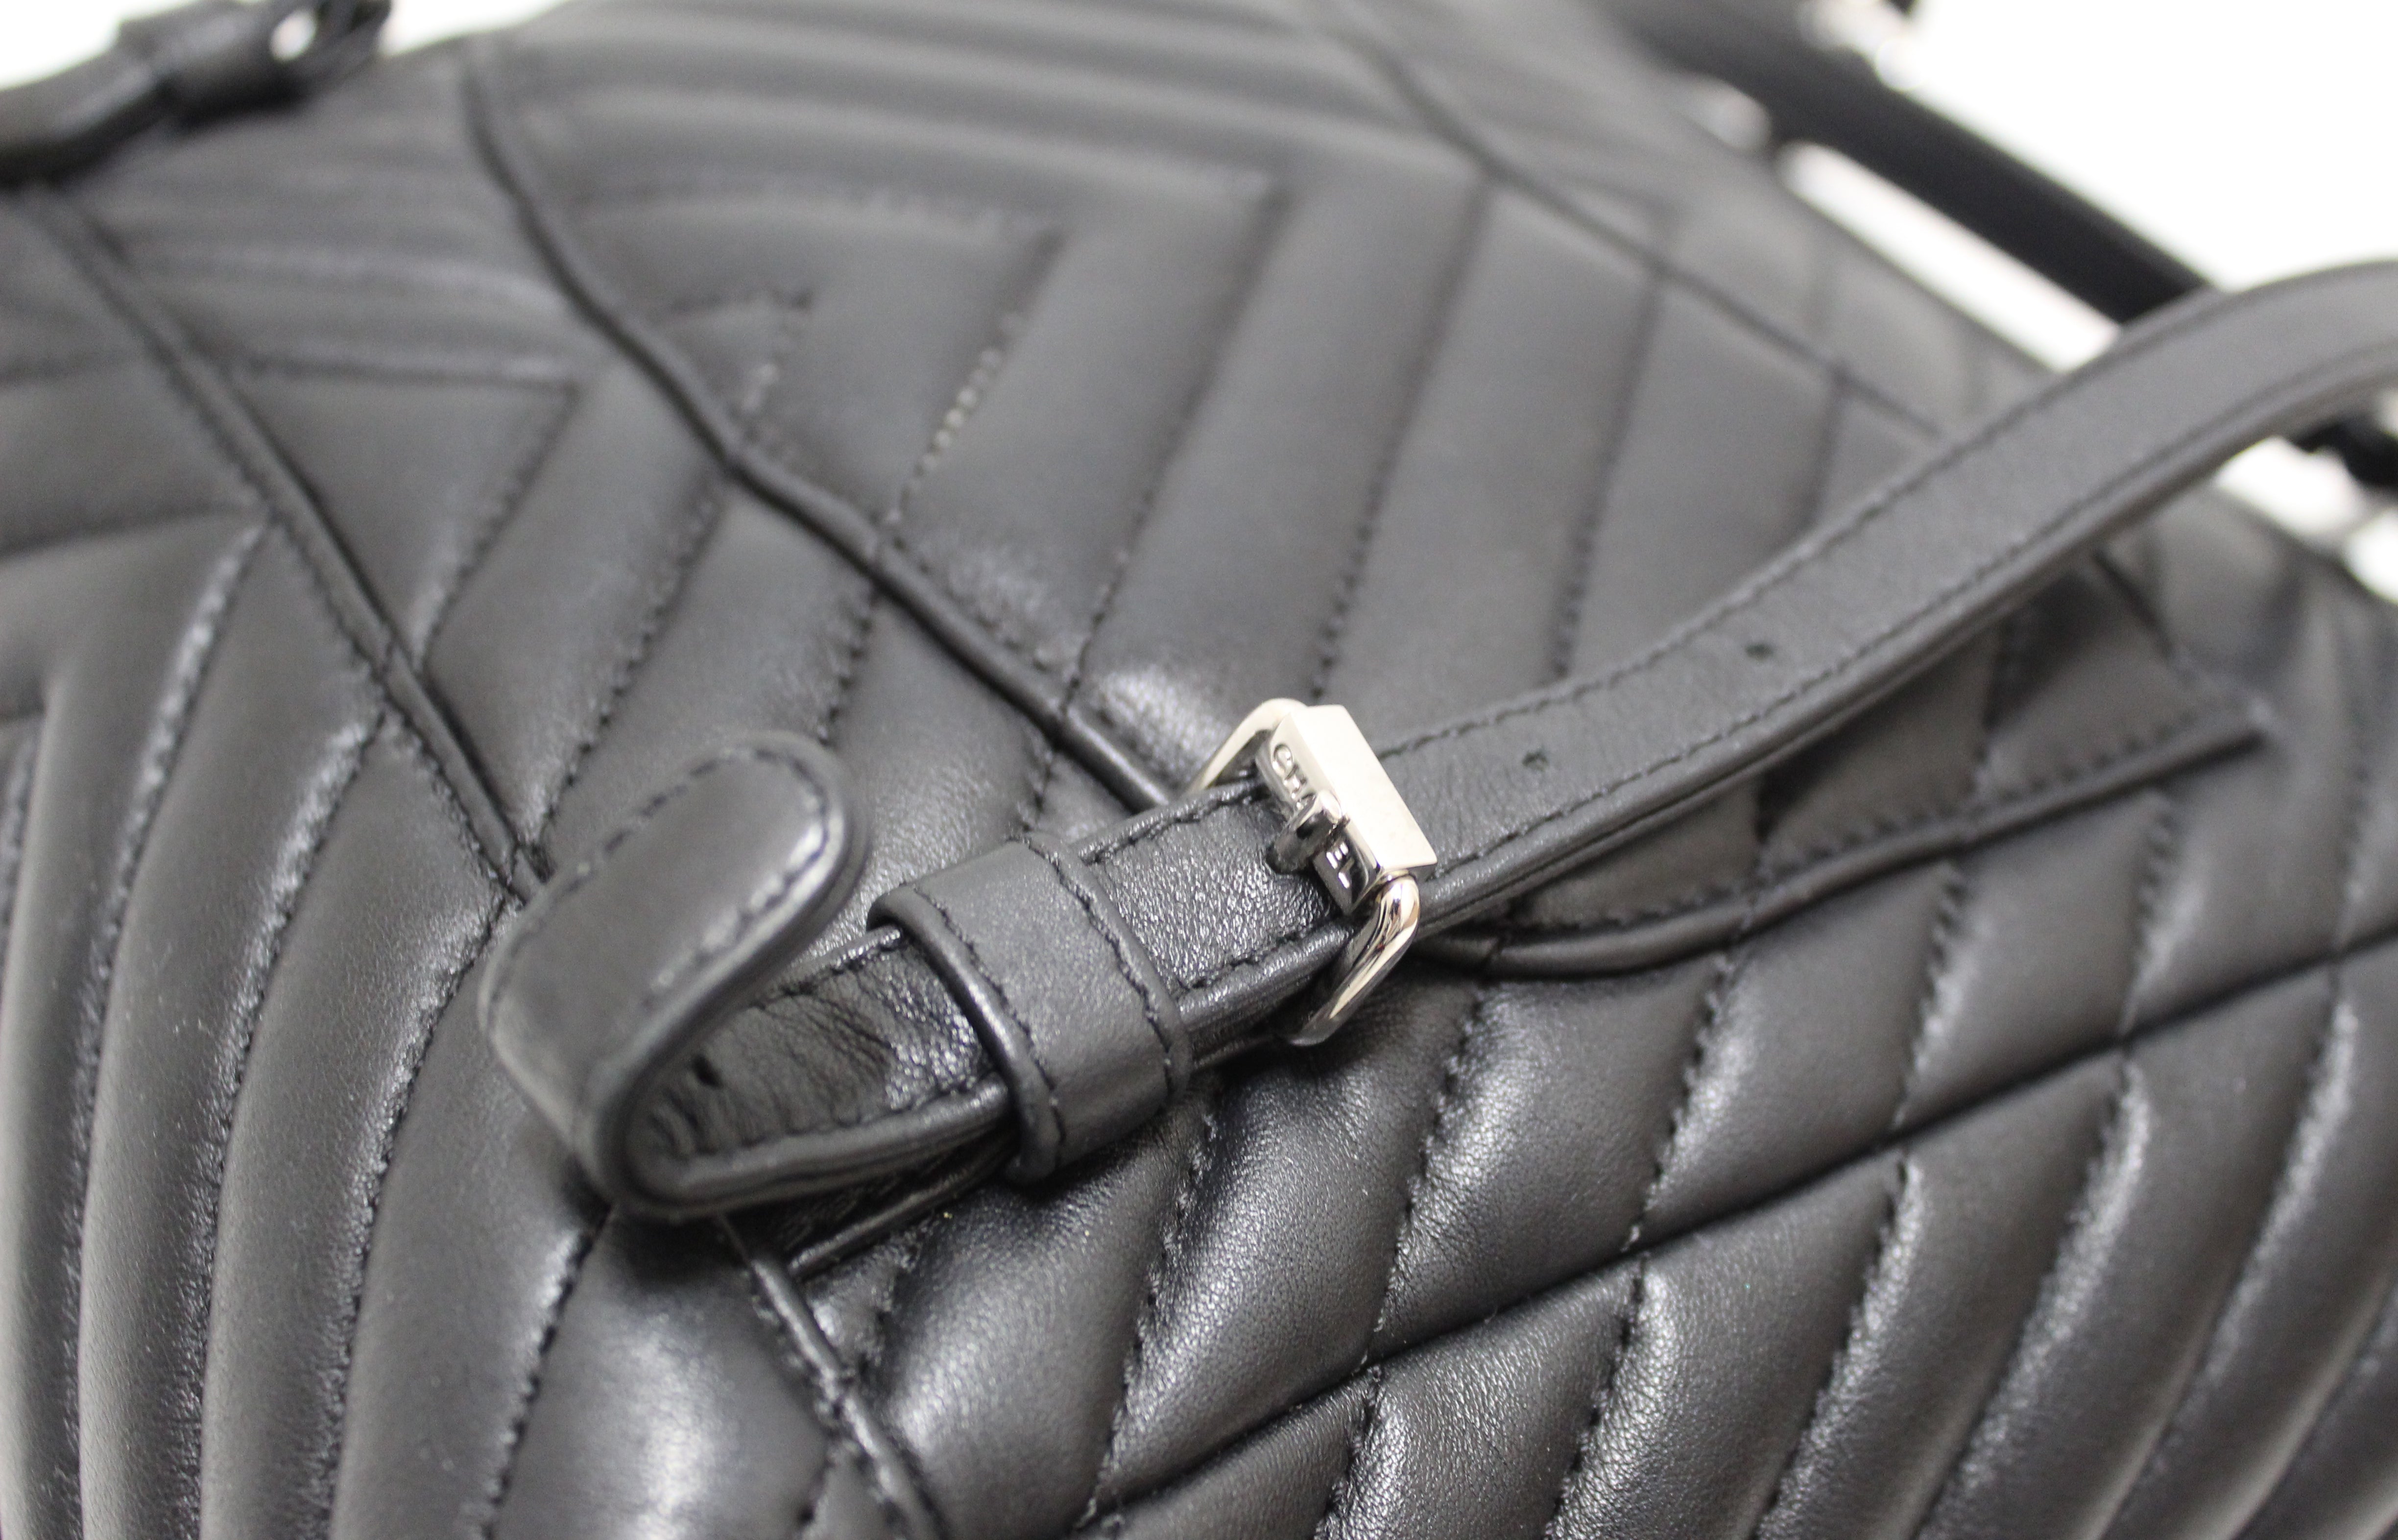 Authentic Chanel Urban Spirit Chevron Black Calfskin Backpack